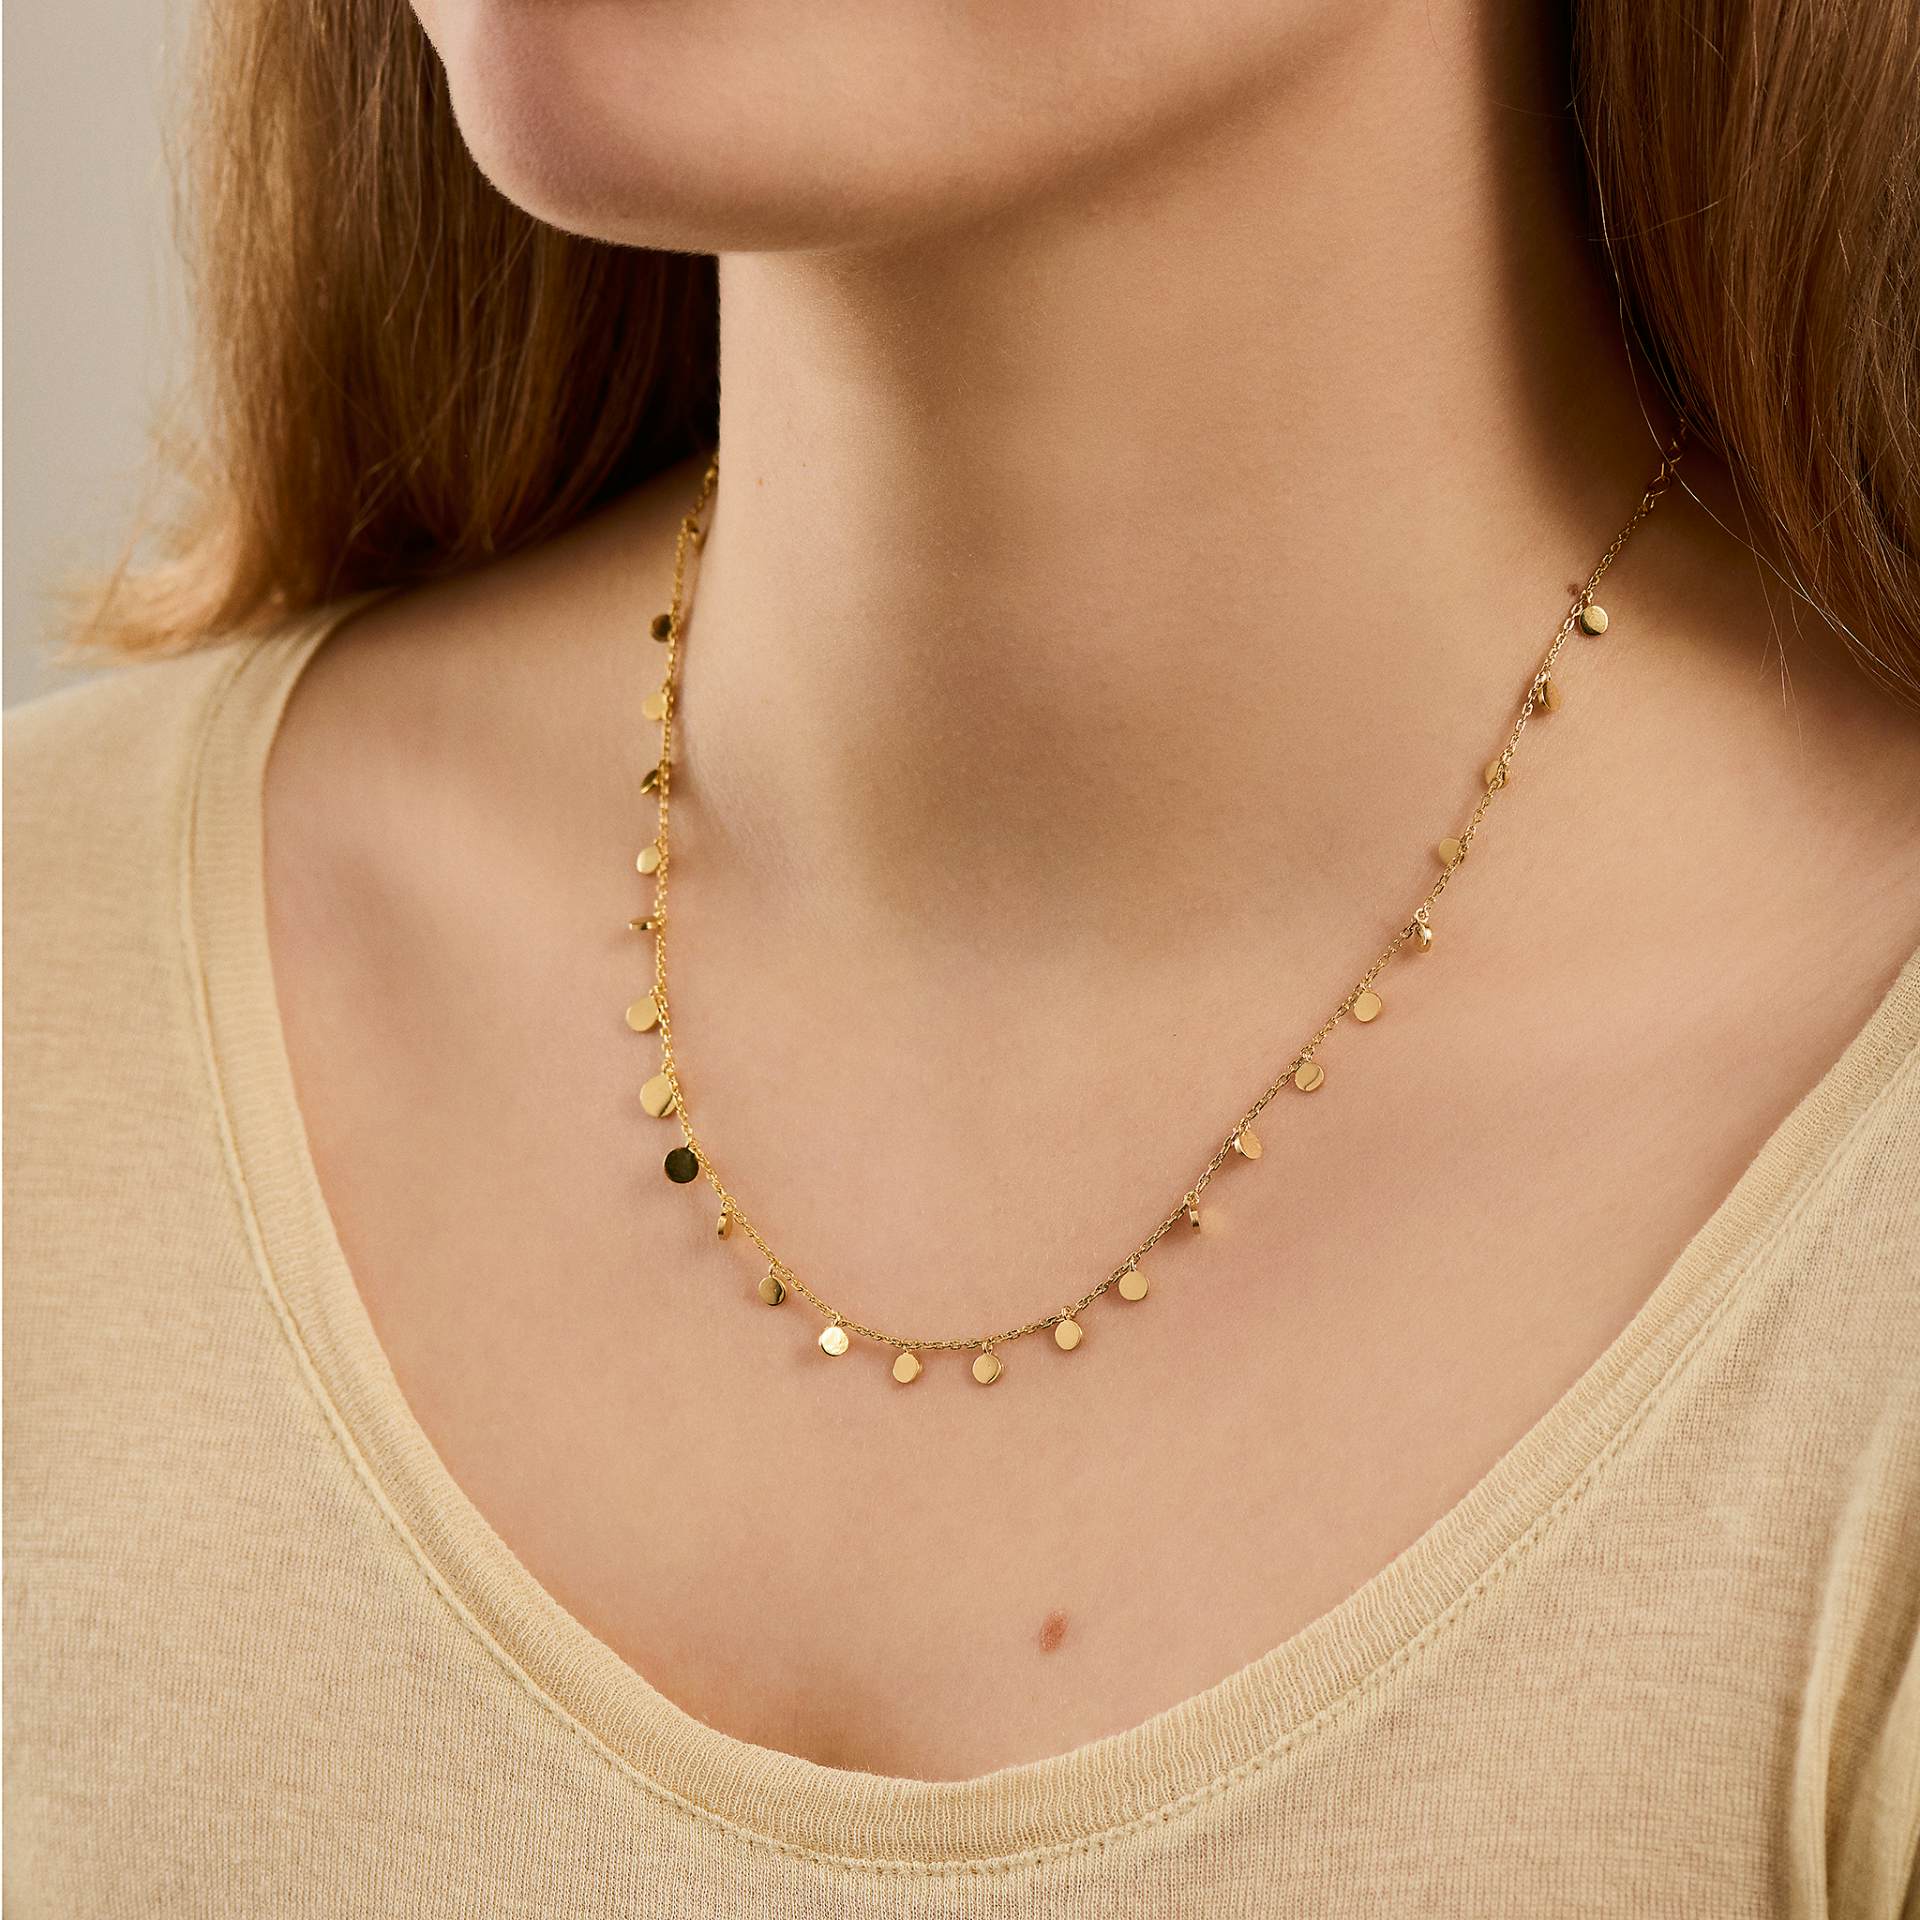 Sheen necklace von Pernille Corydon in Vergoldet-Silber Sterling 925